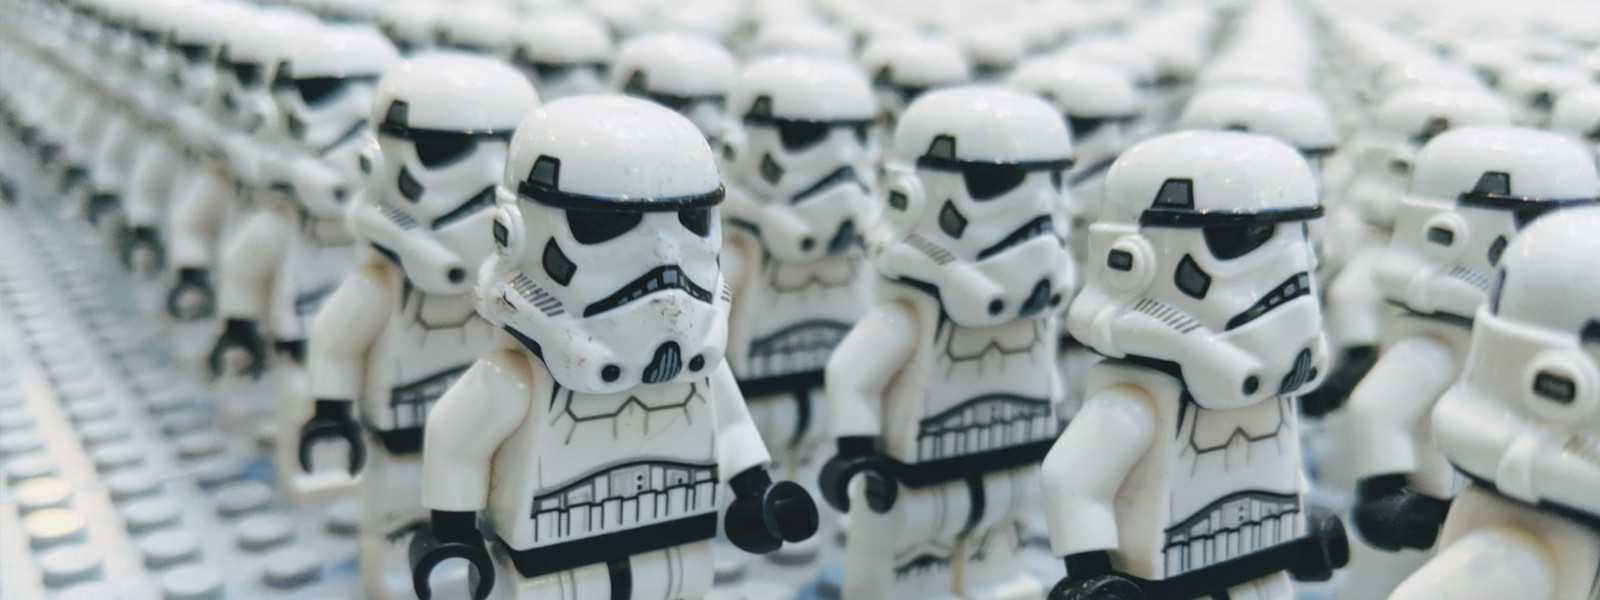 Stormtroopers Ready - <a href='https://unsplash.com/@__itsflores?utm_source=unsplash&utm_medium=referral&utm_content=creditCopyText'>Omar Flores</a>